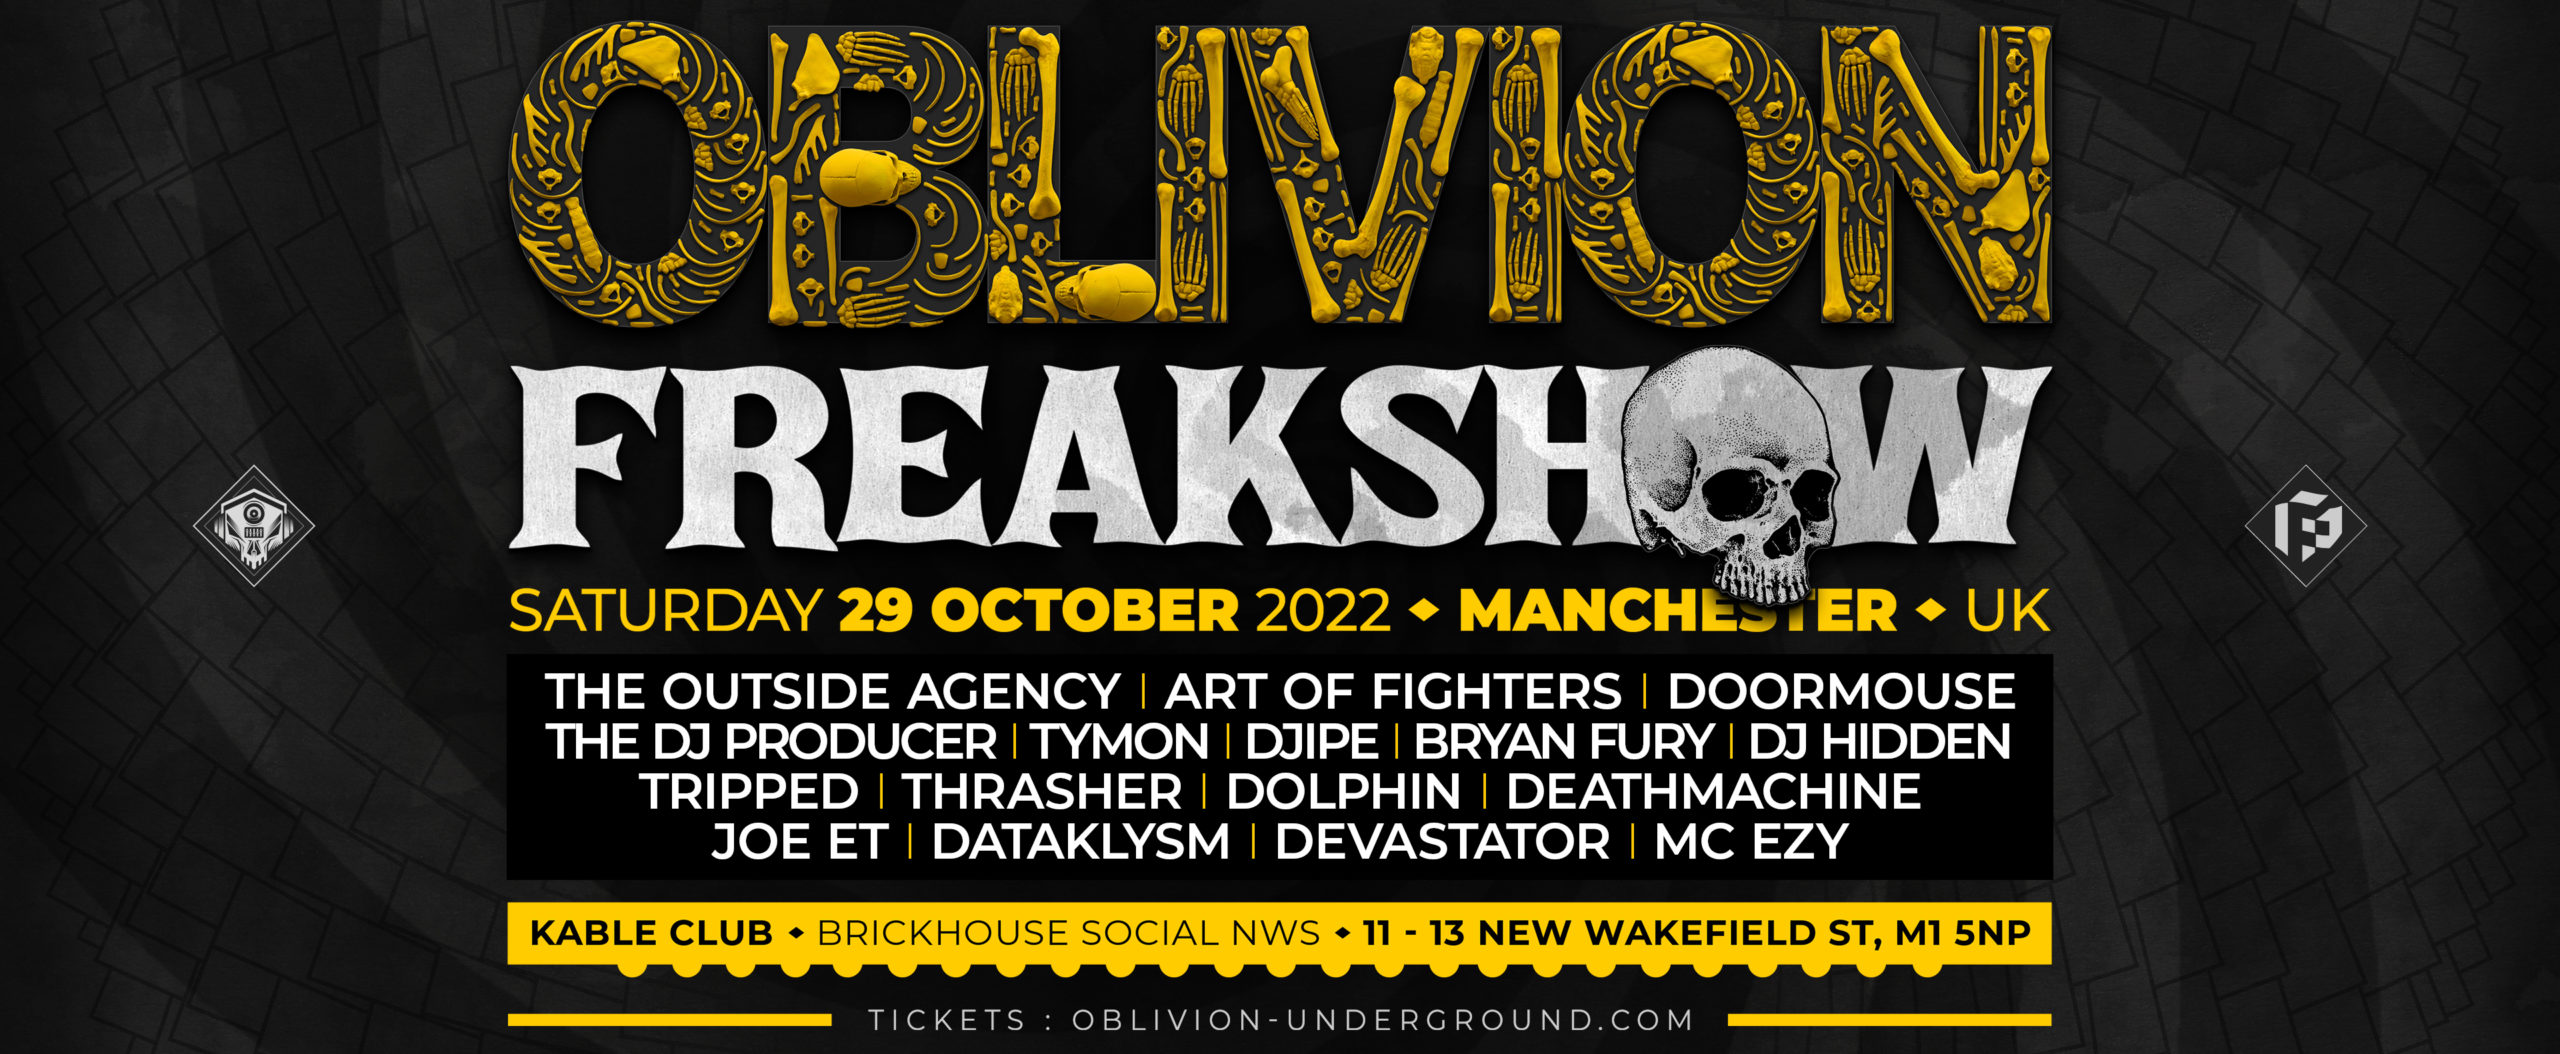 TICKETS - OBLIVION : FREAKSHOW - Saturday 29.10.22 - Halloween 2022 - Manchester (UK) - Oblivion Underground - Recordings & Events - oblivion-underground.com - Party, Rave, Event